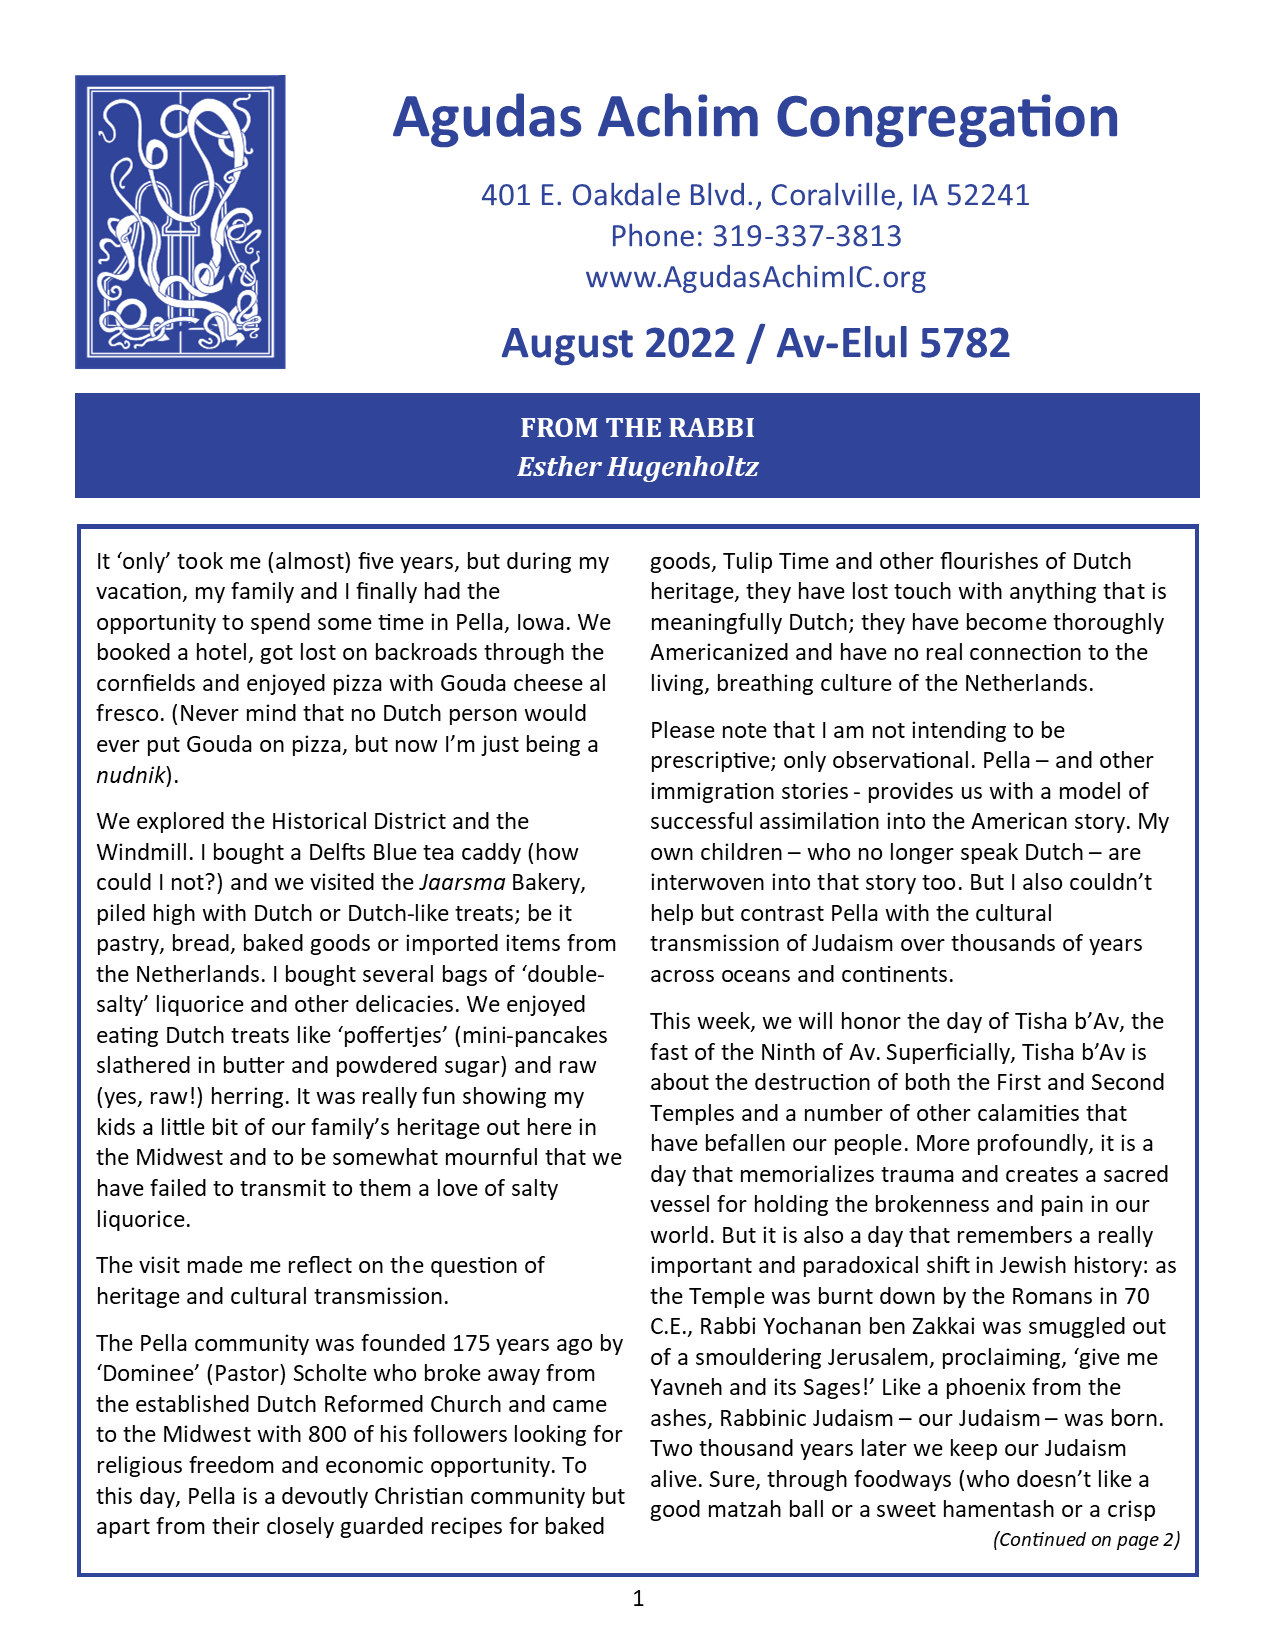 August 2022 Bulletin Cover